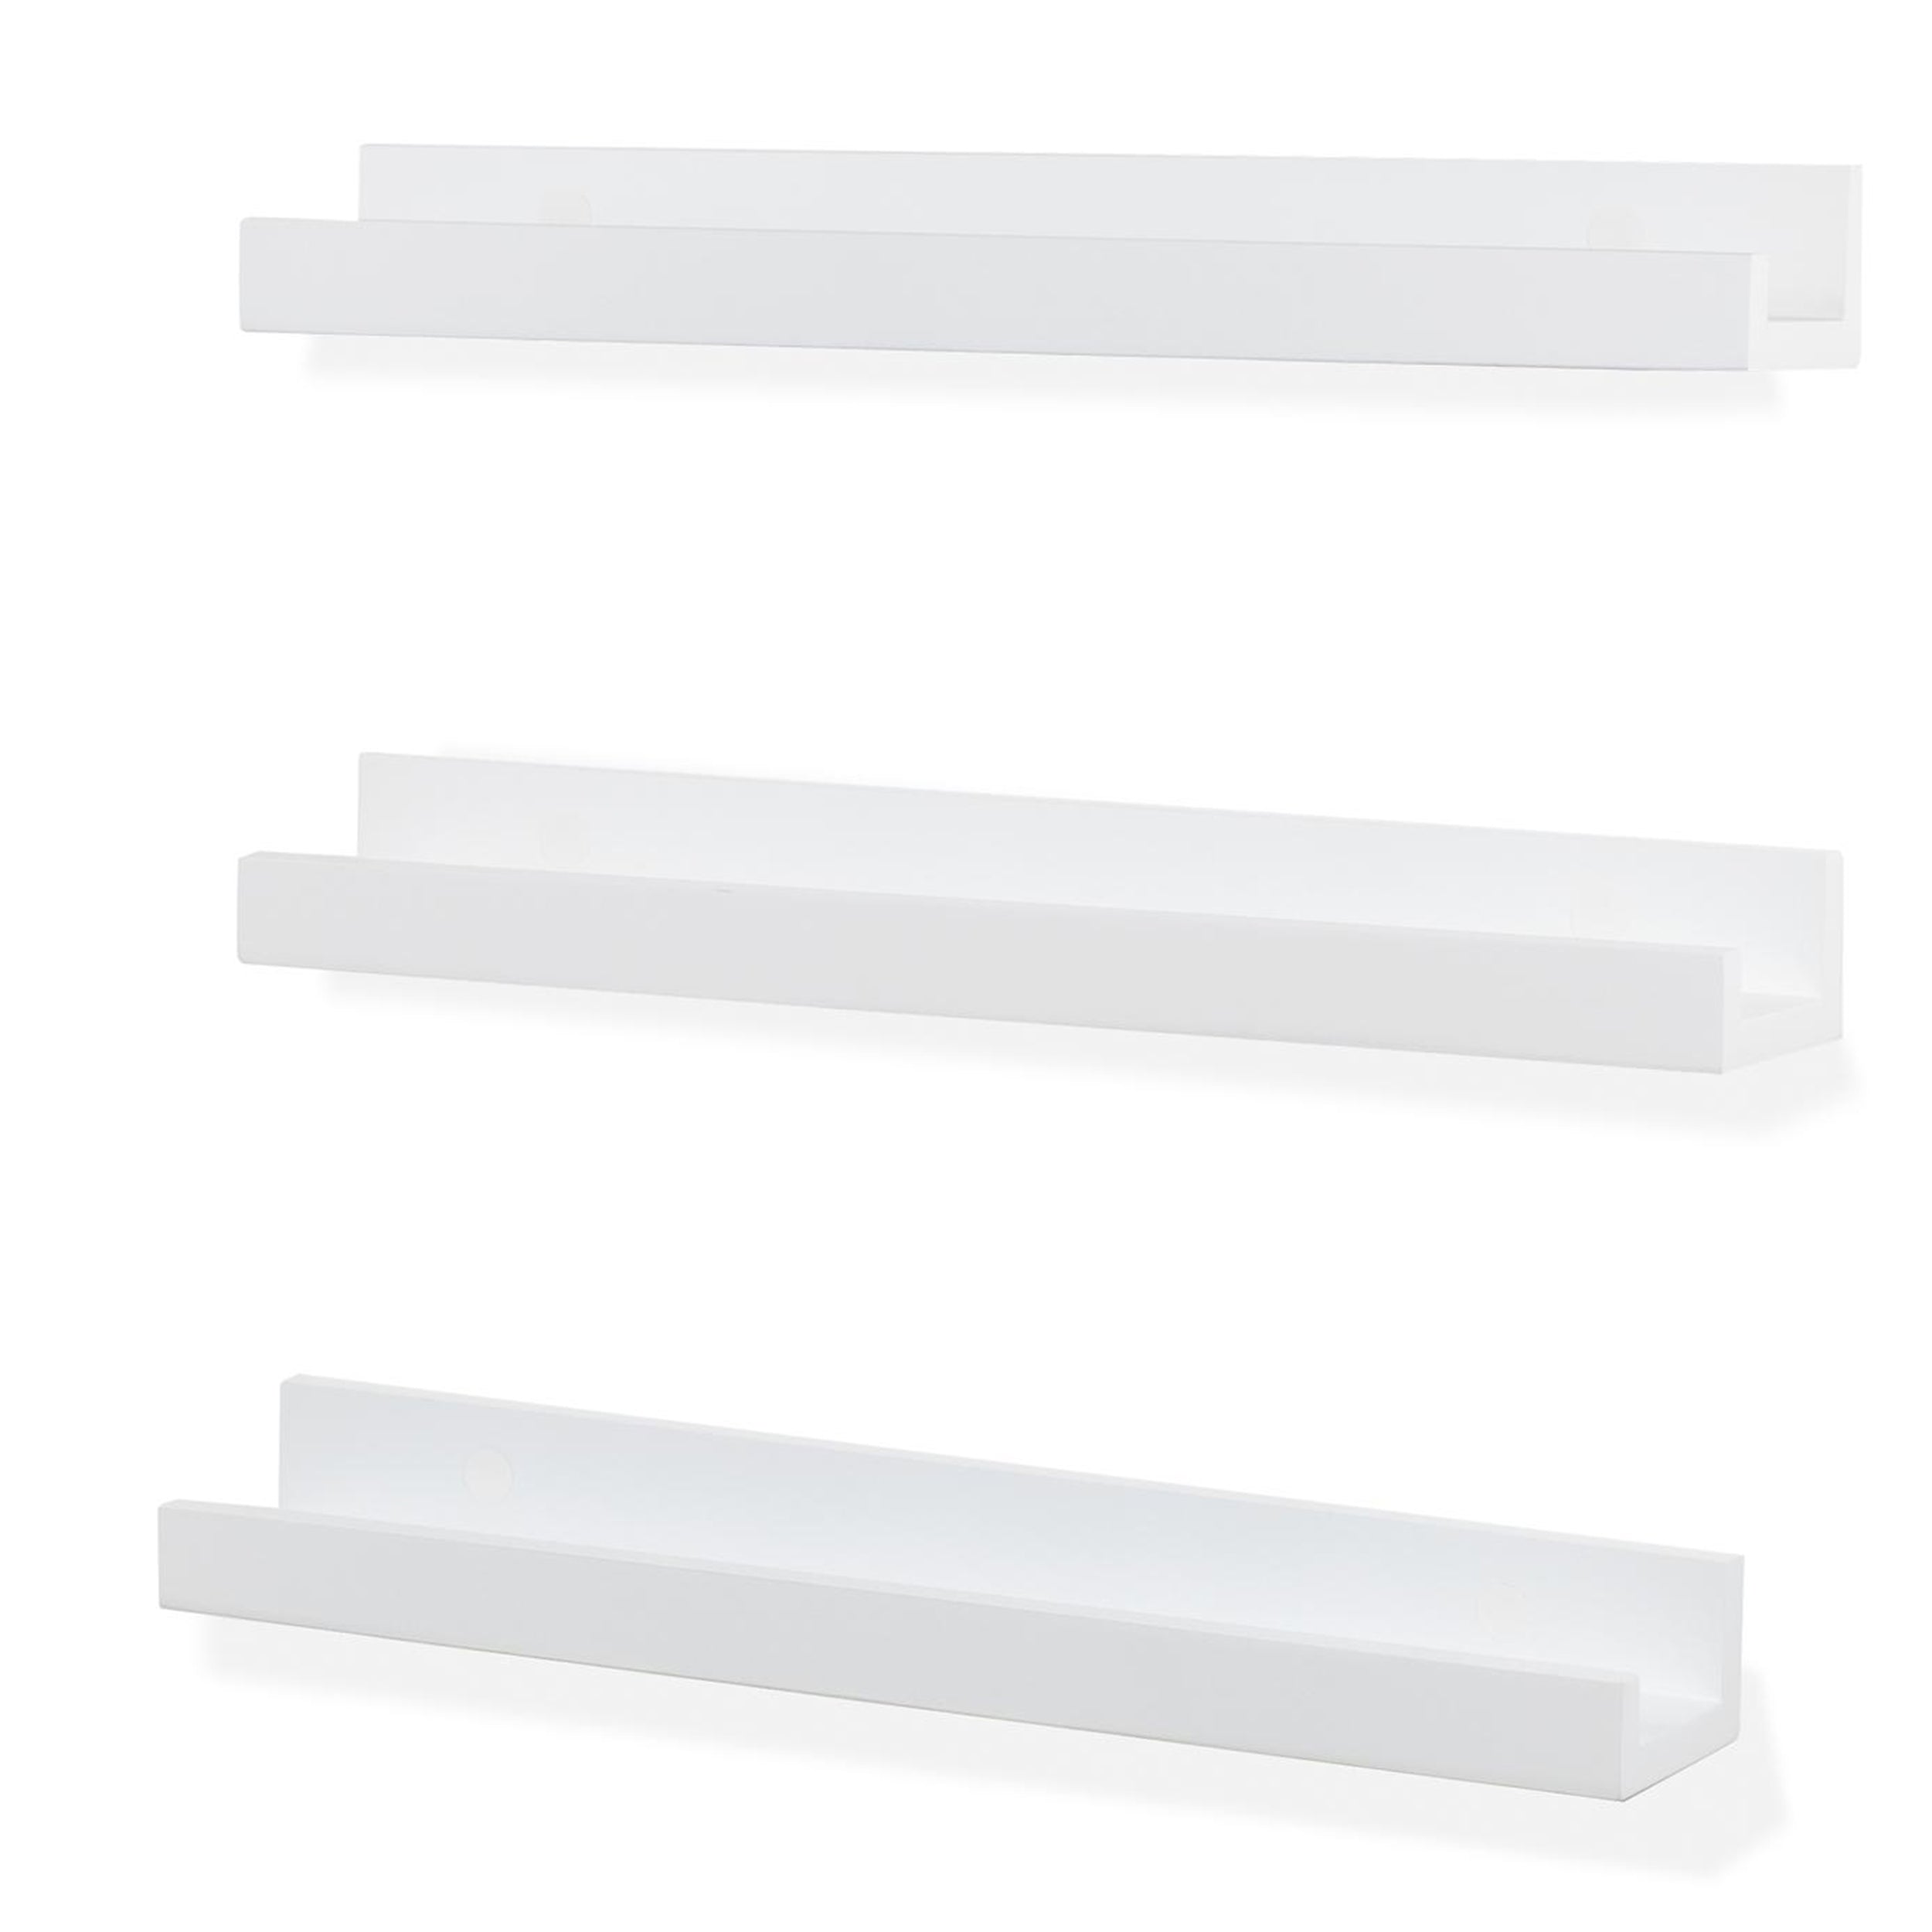 DENVER Floating Shelves Wall Bookshelf and Nursery Decor – 17” Length x 3.15" Depth – Set of 3 - White - Wallniture